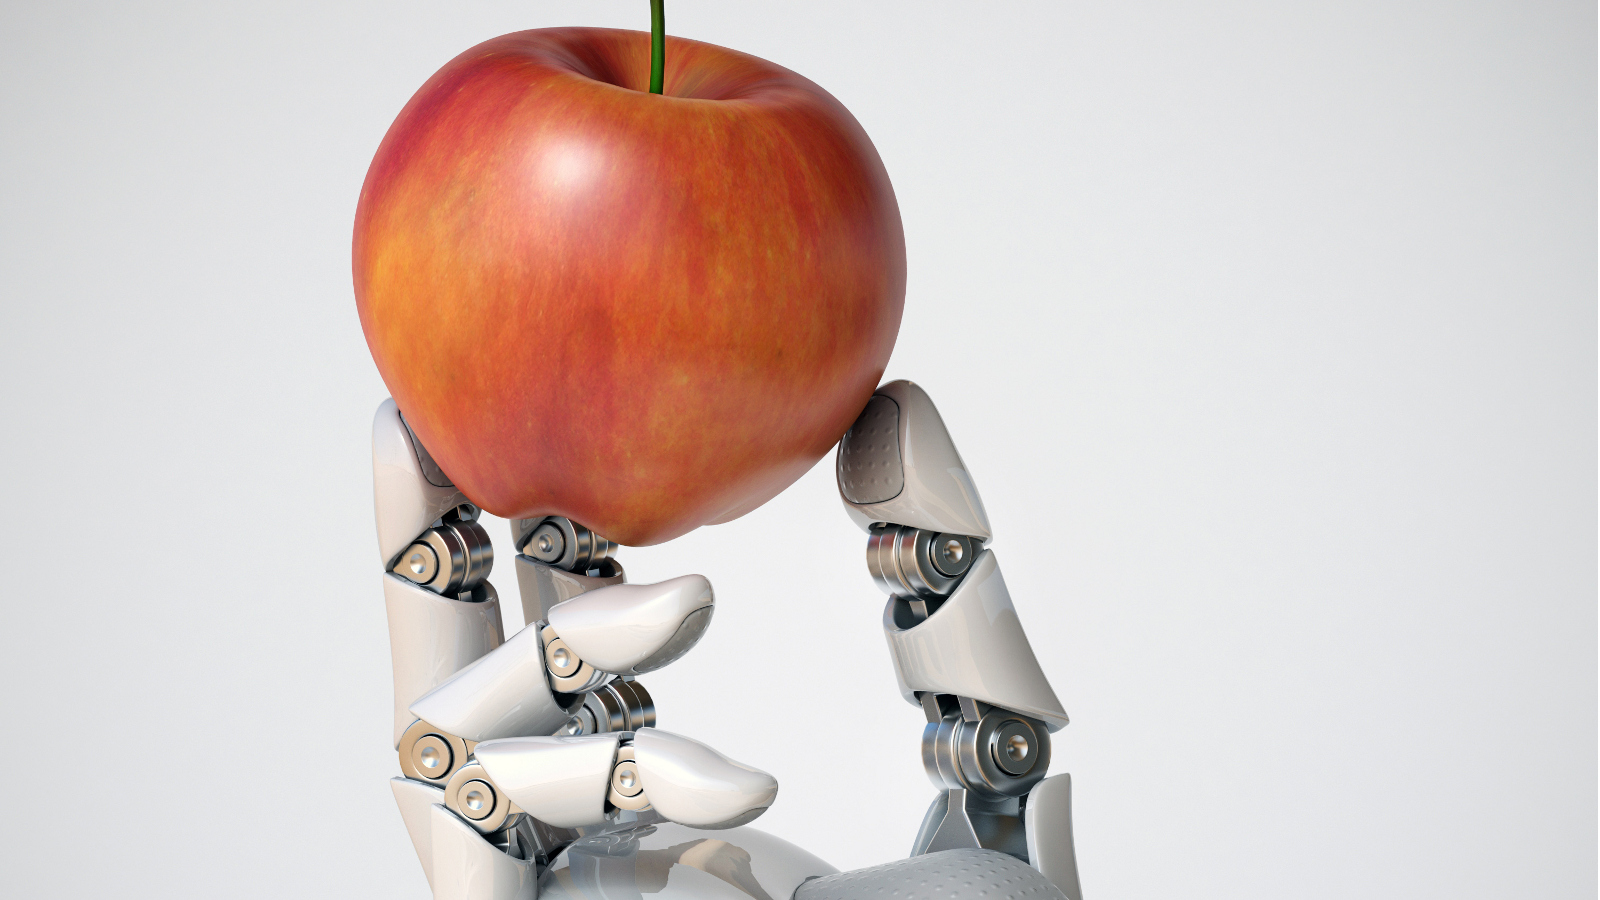 Roboterhand hält einen Apfel